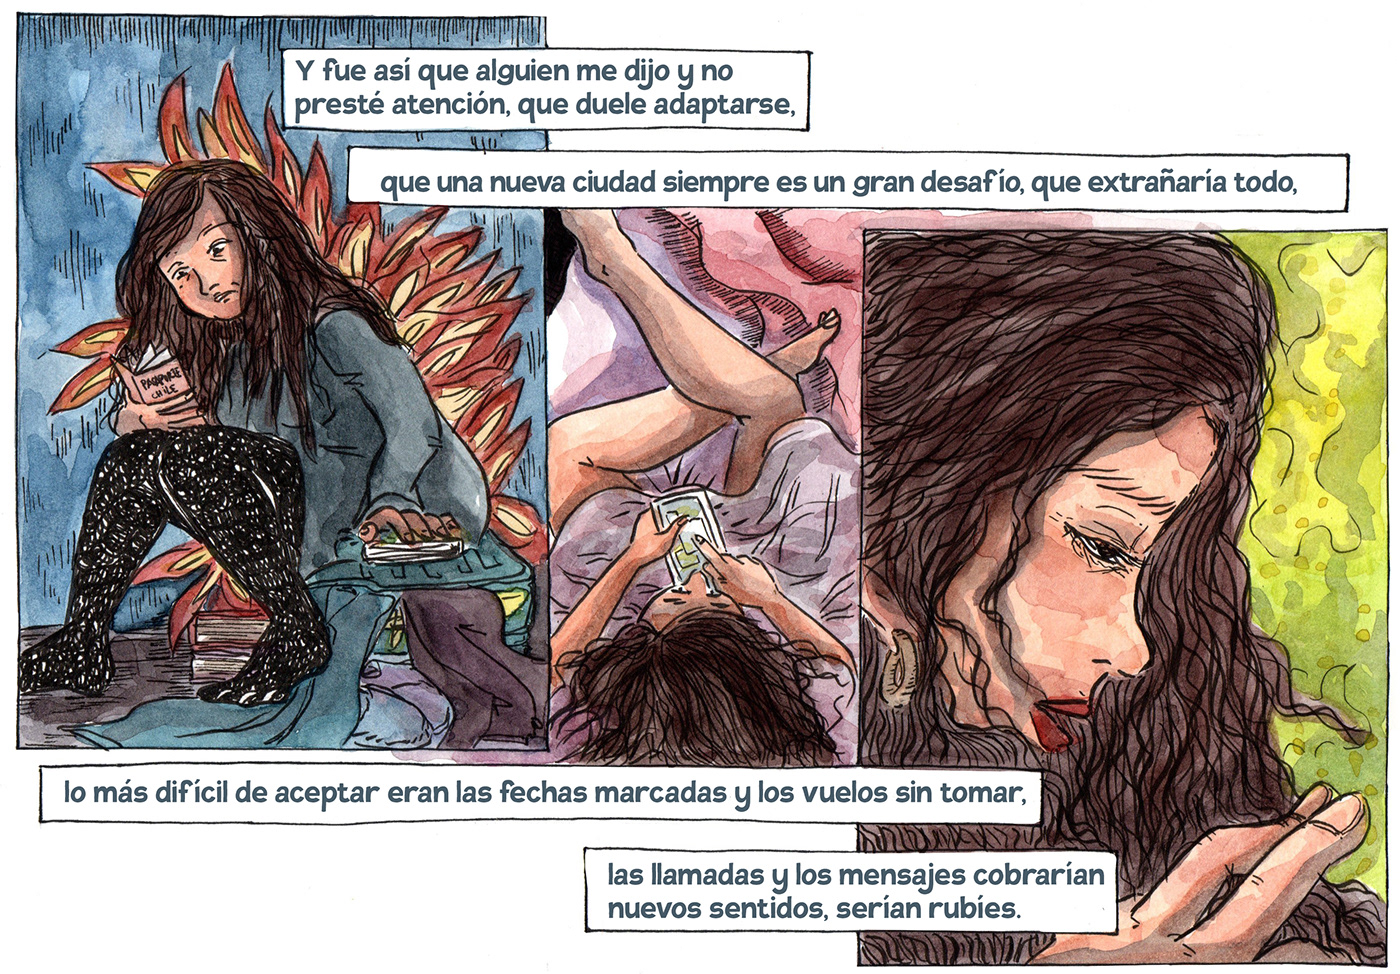 bd chile comic españa historieta inmigrante migrar panchulei poesia